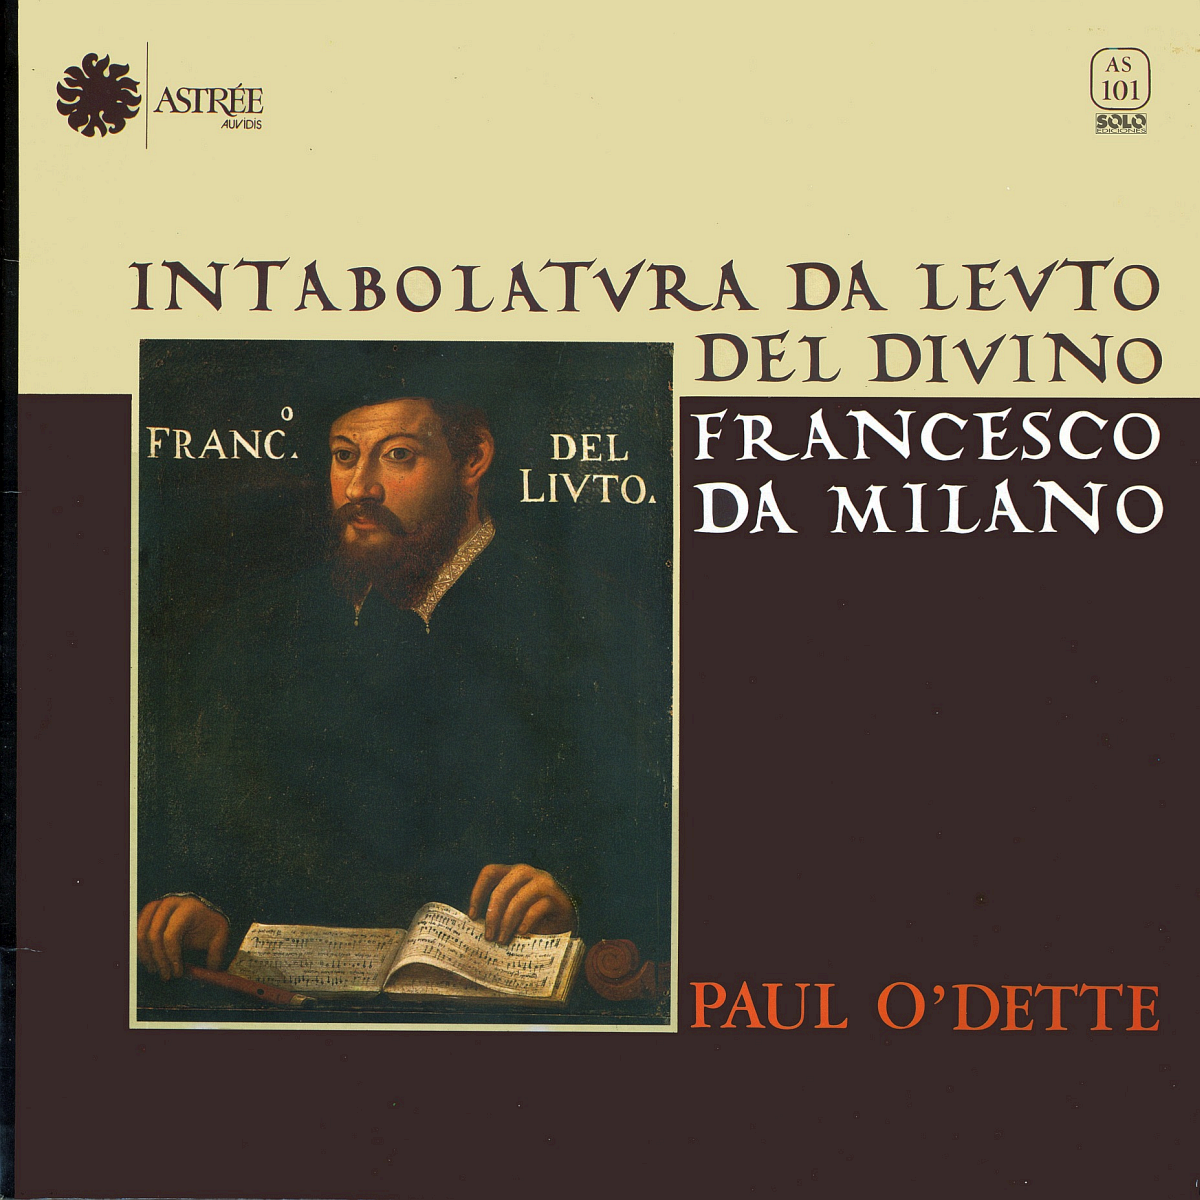 front - Paul O'Dette - Francesco Da Milano - Intabolatura Da Levto.png